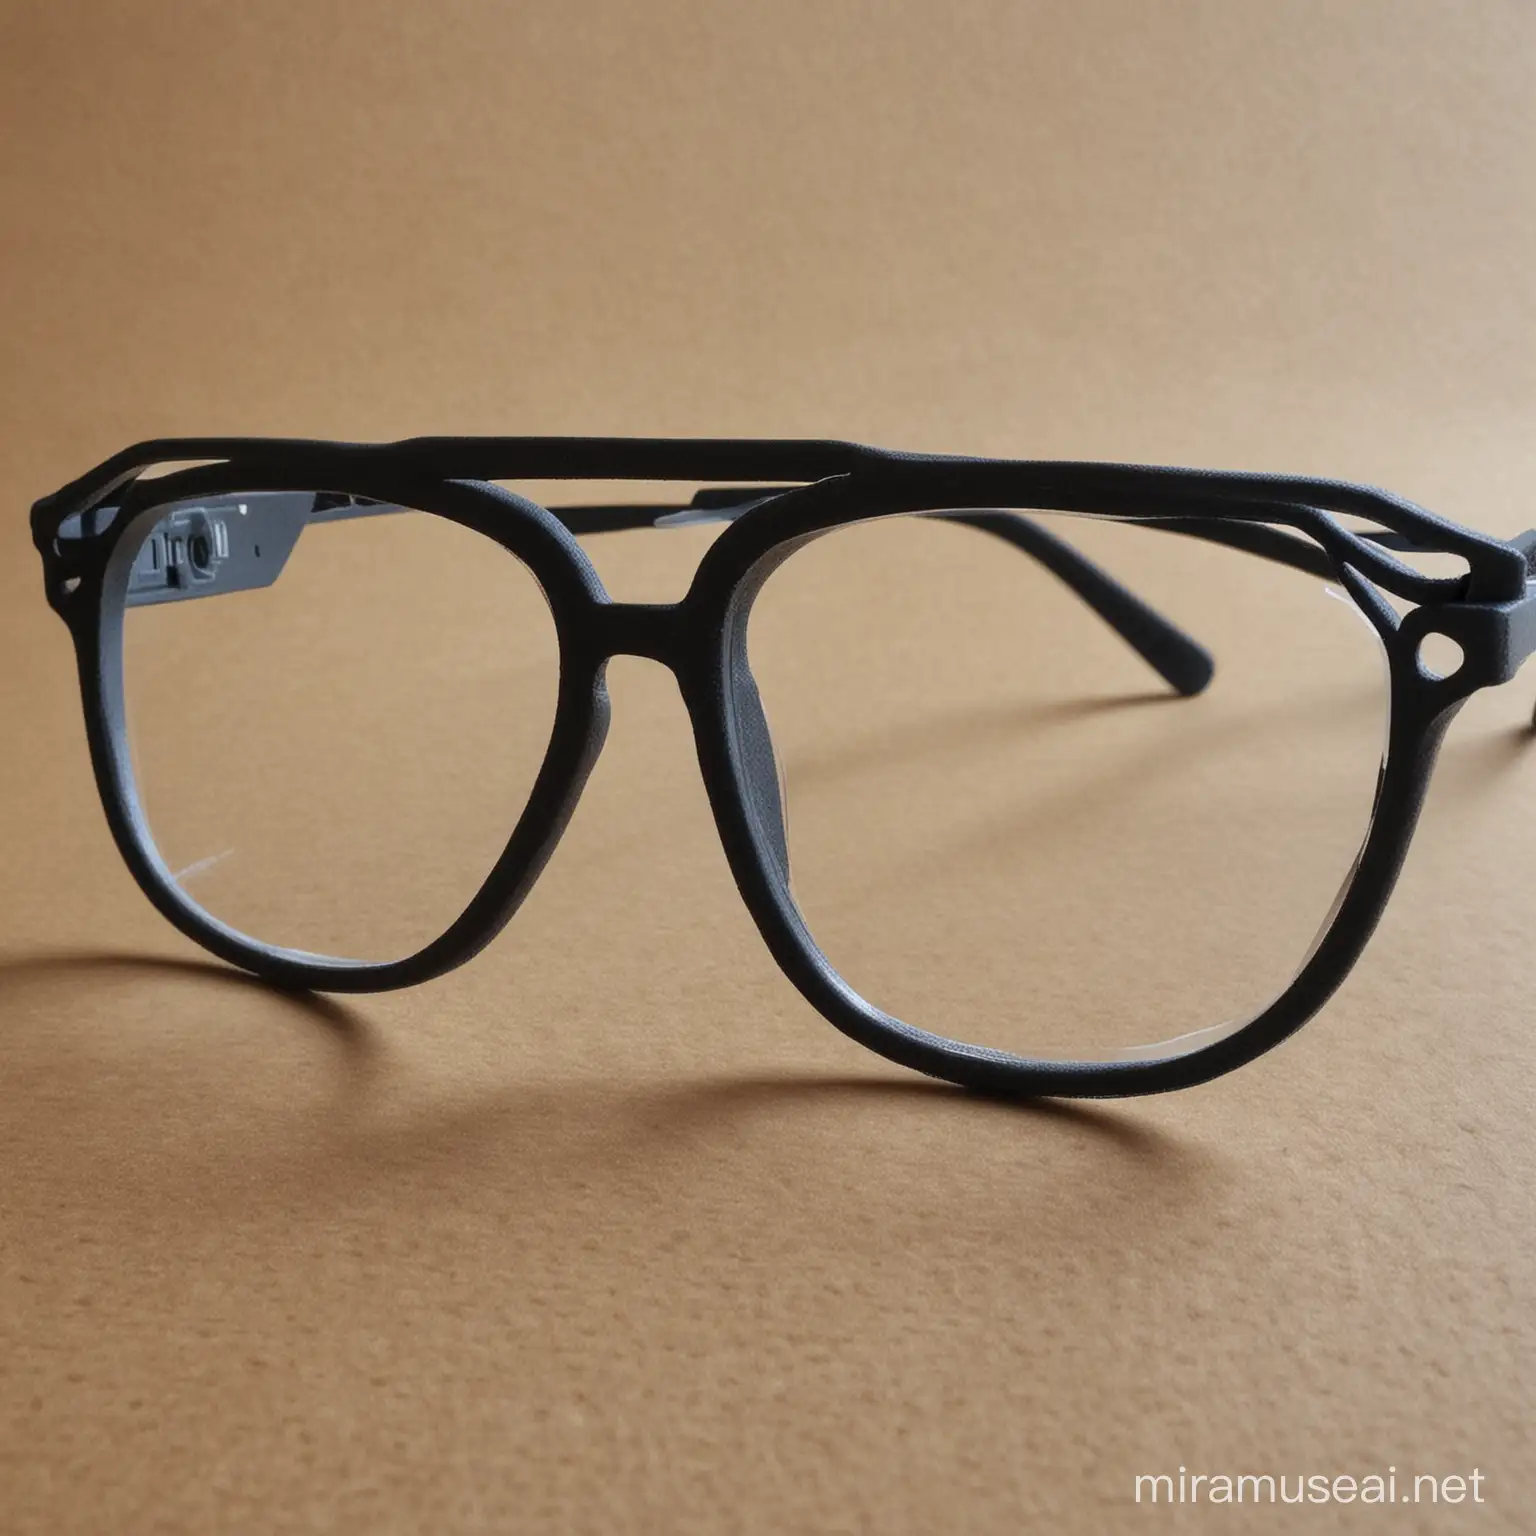 3D Printer Creating Stylish Eyeglasses